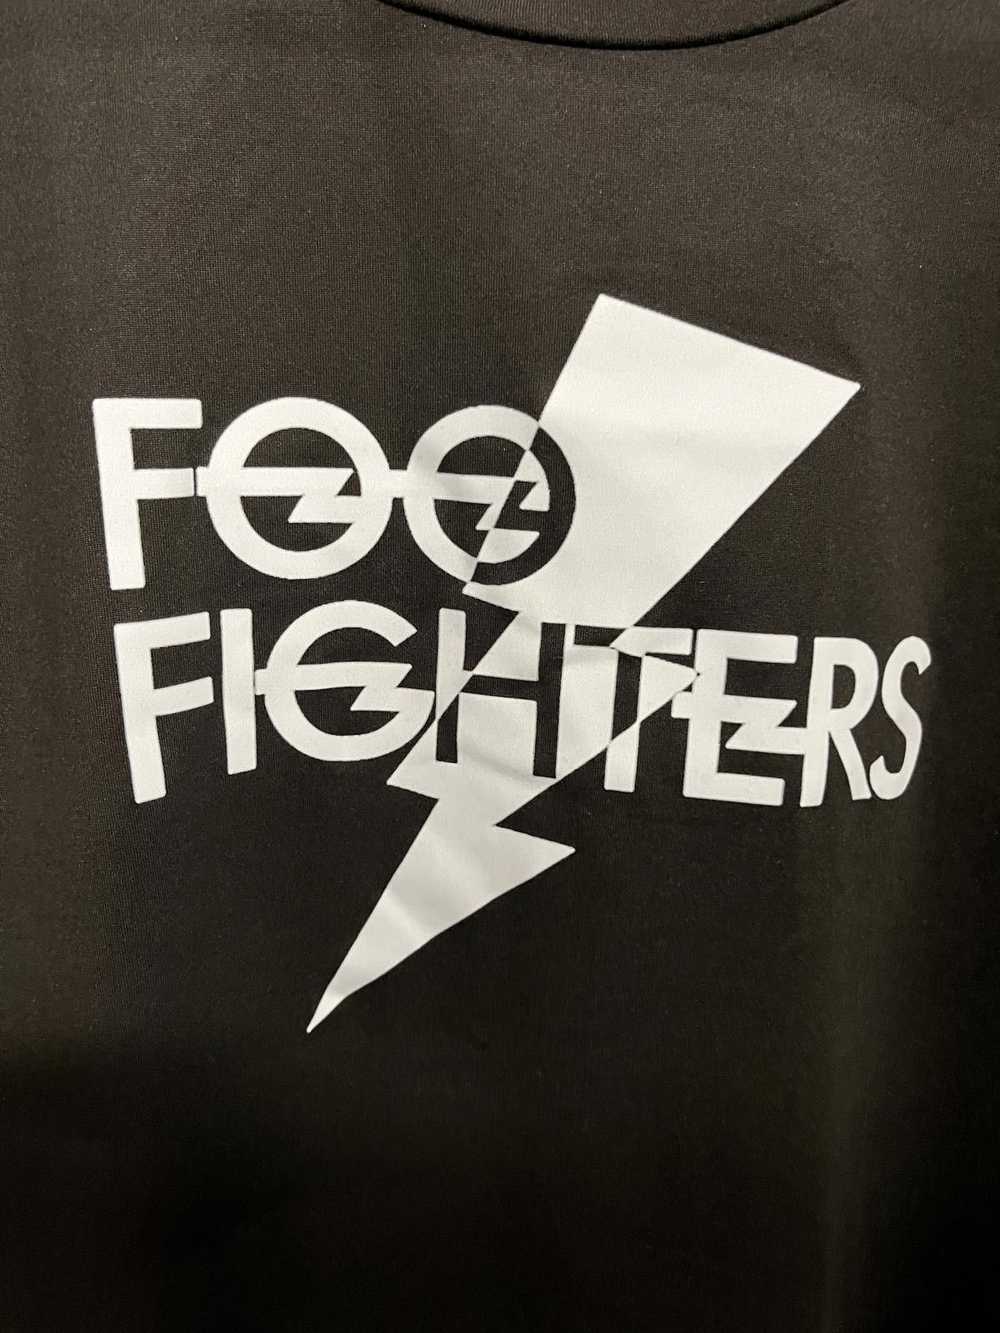 Designer Foo Fighters Polyester T-shirt - image 3